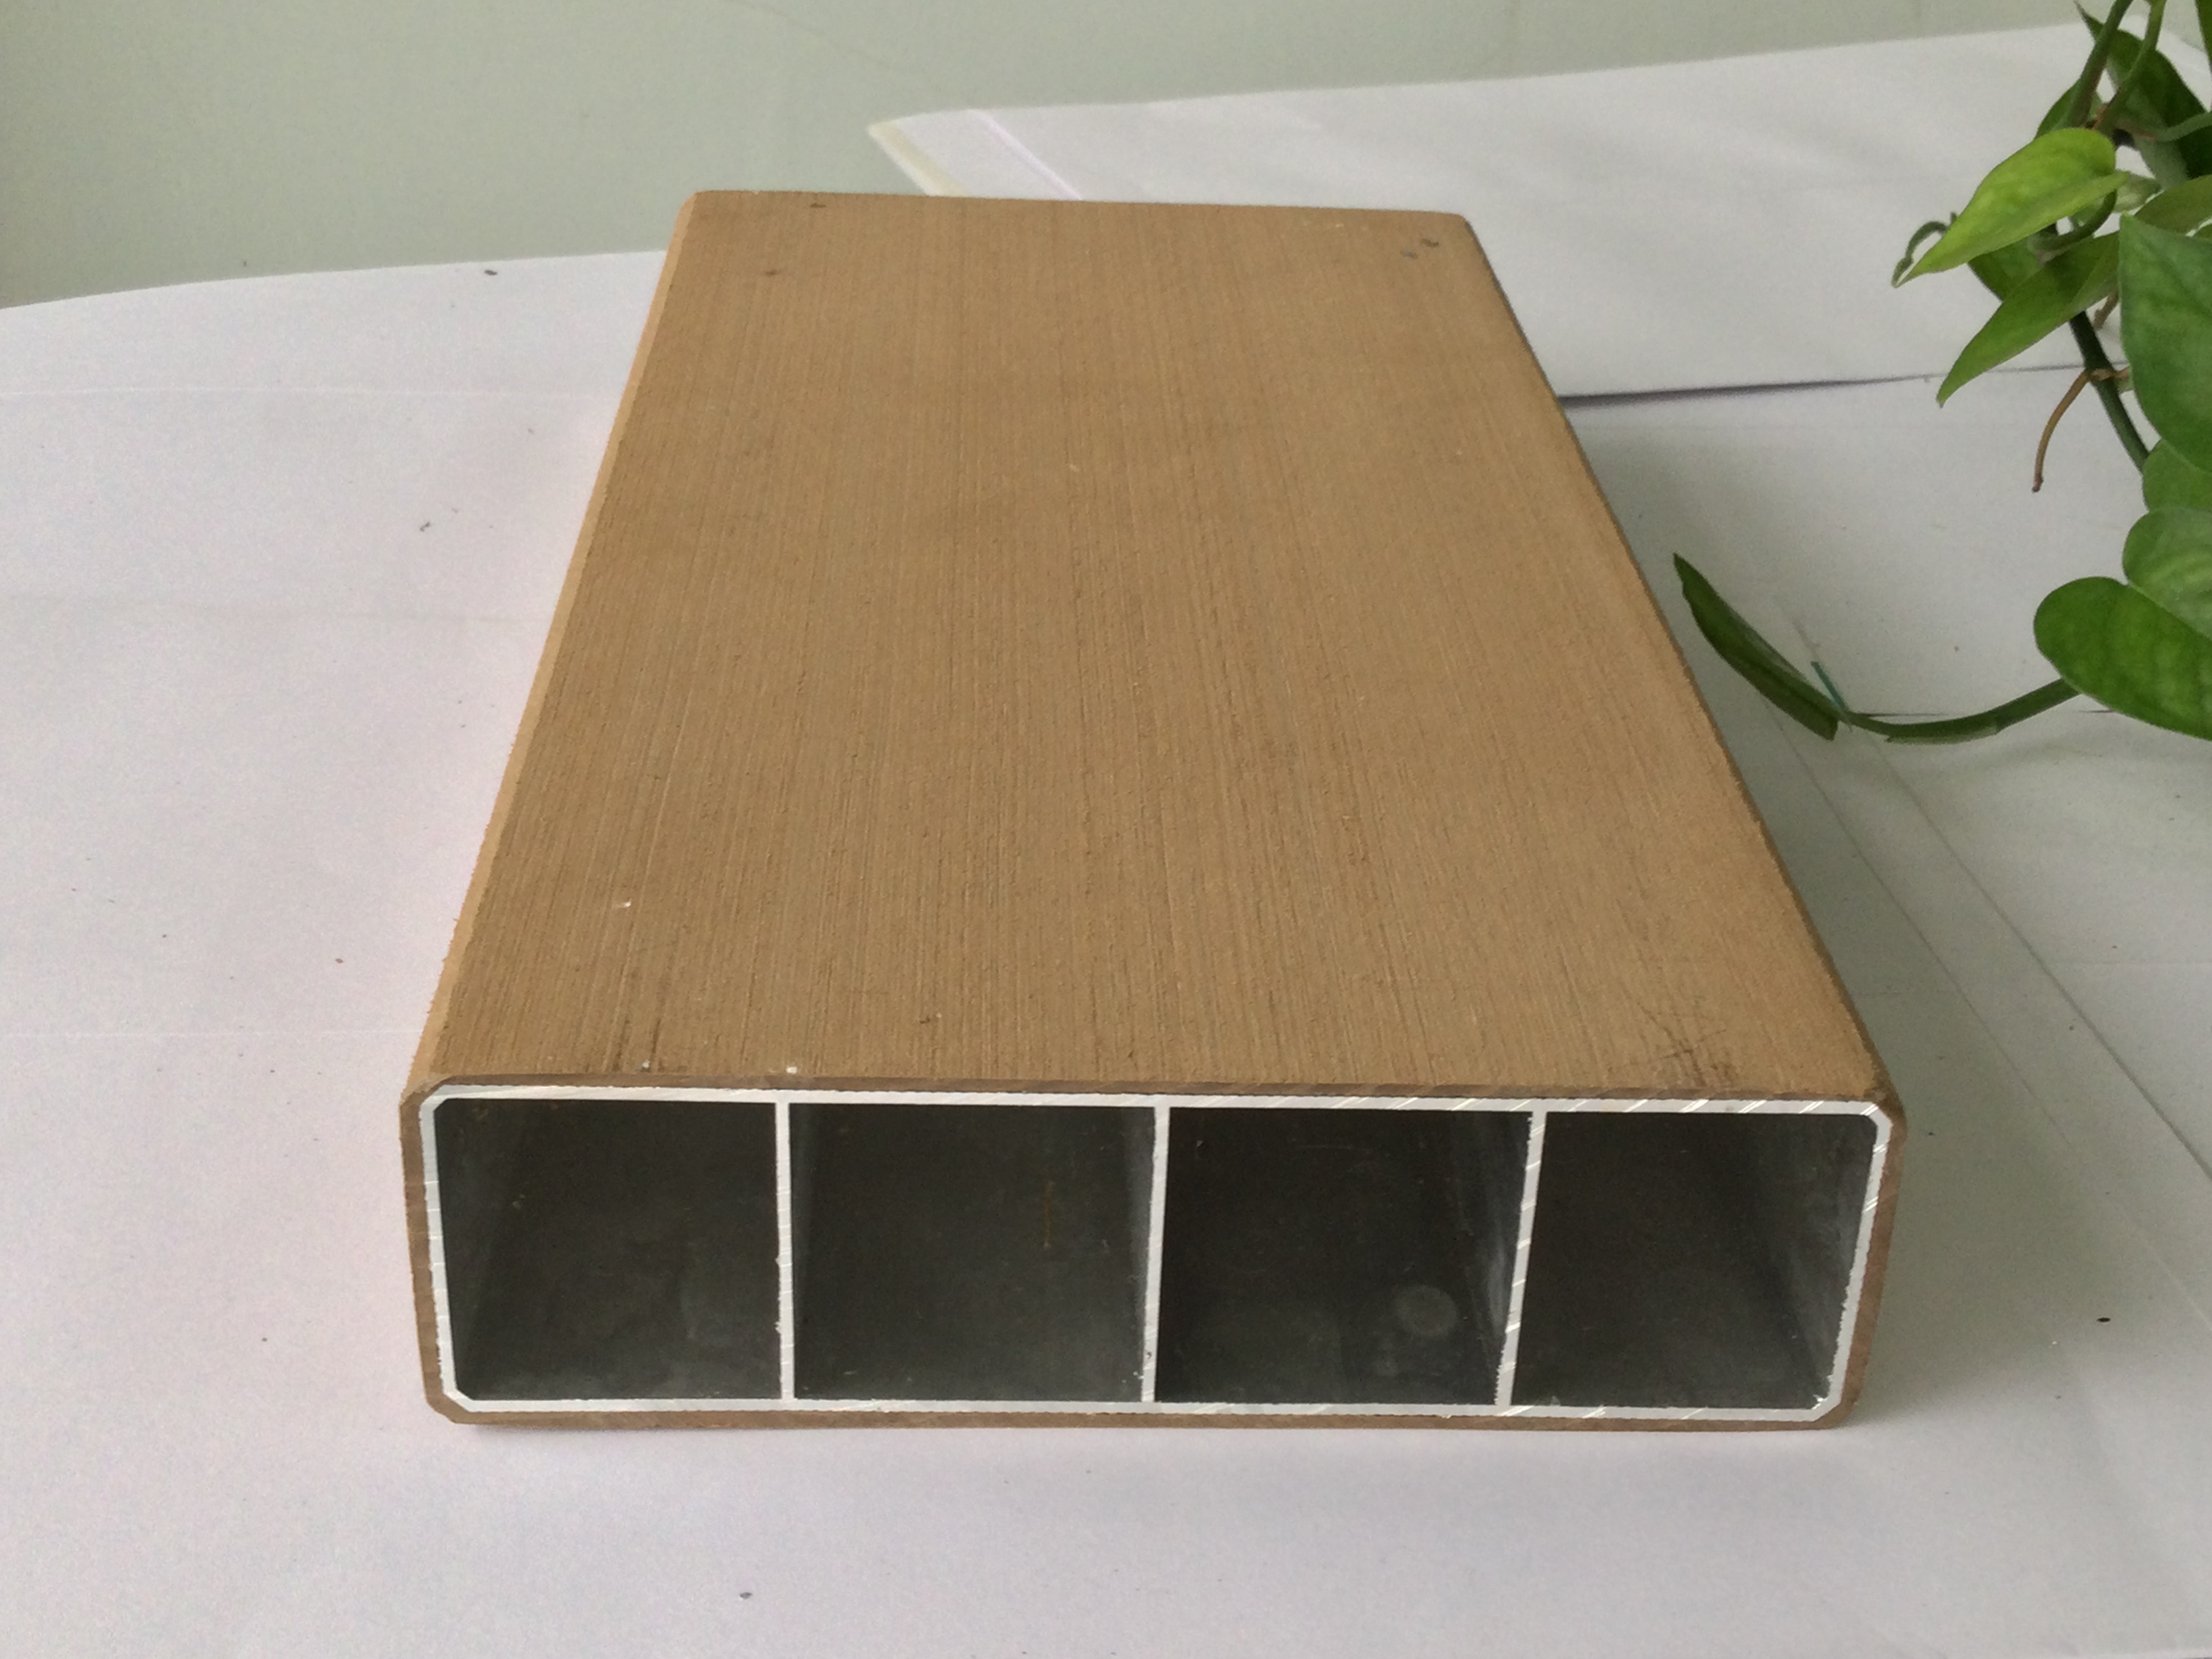 Thanh lam gỗ nhôm nhựa Alwood ALPO45150